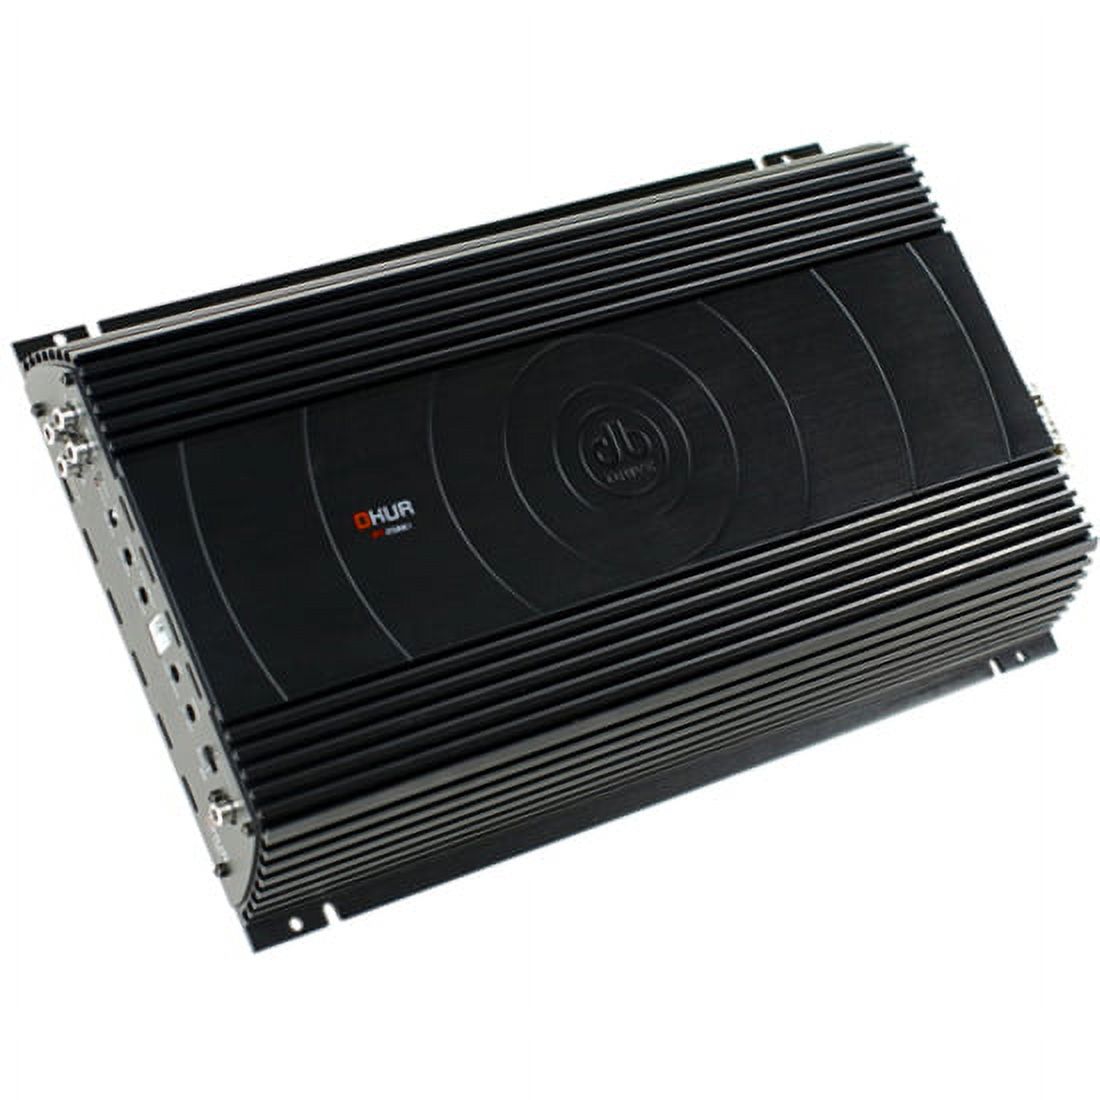 DB DRIVE A71500.1 Okur(R) A7 Series Monoblock Class D Amp (1,500 Watts max) - image 1 of 2